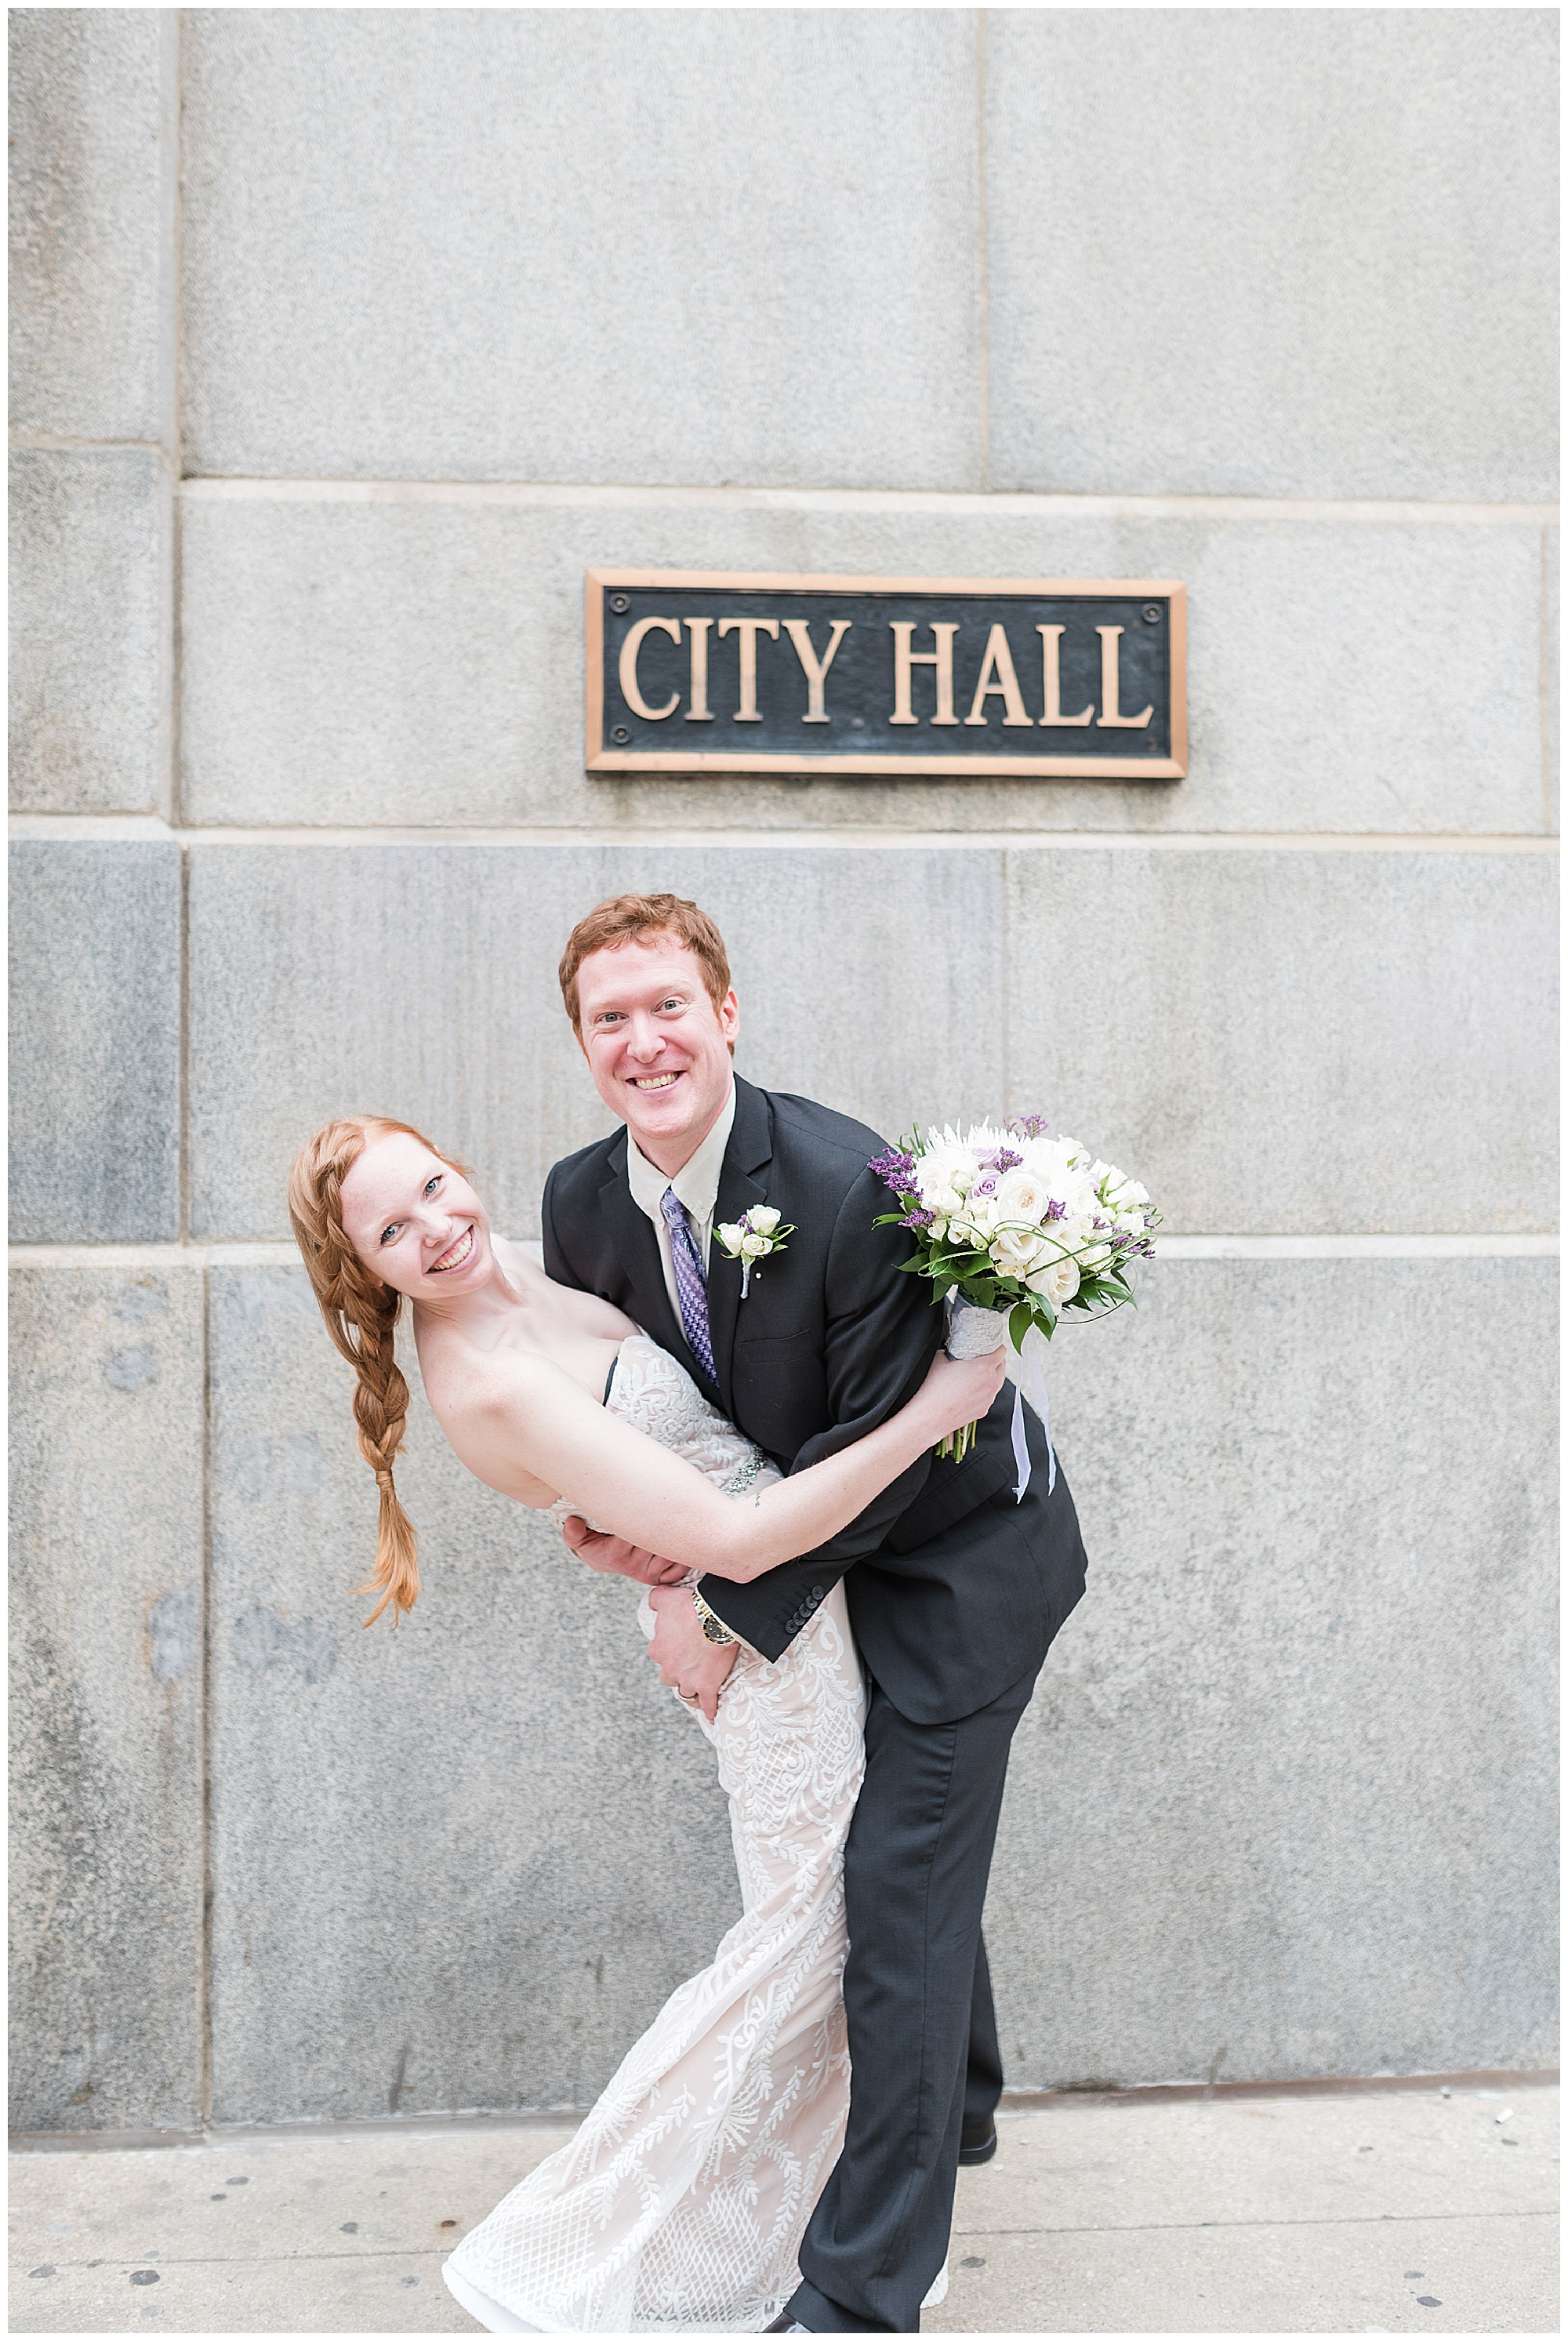 Elopement Wedding in Chicago City Hall